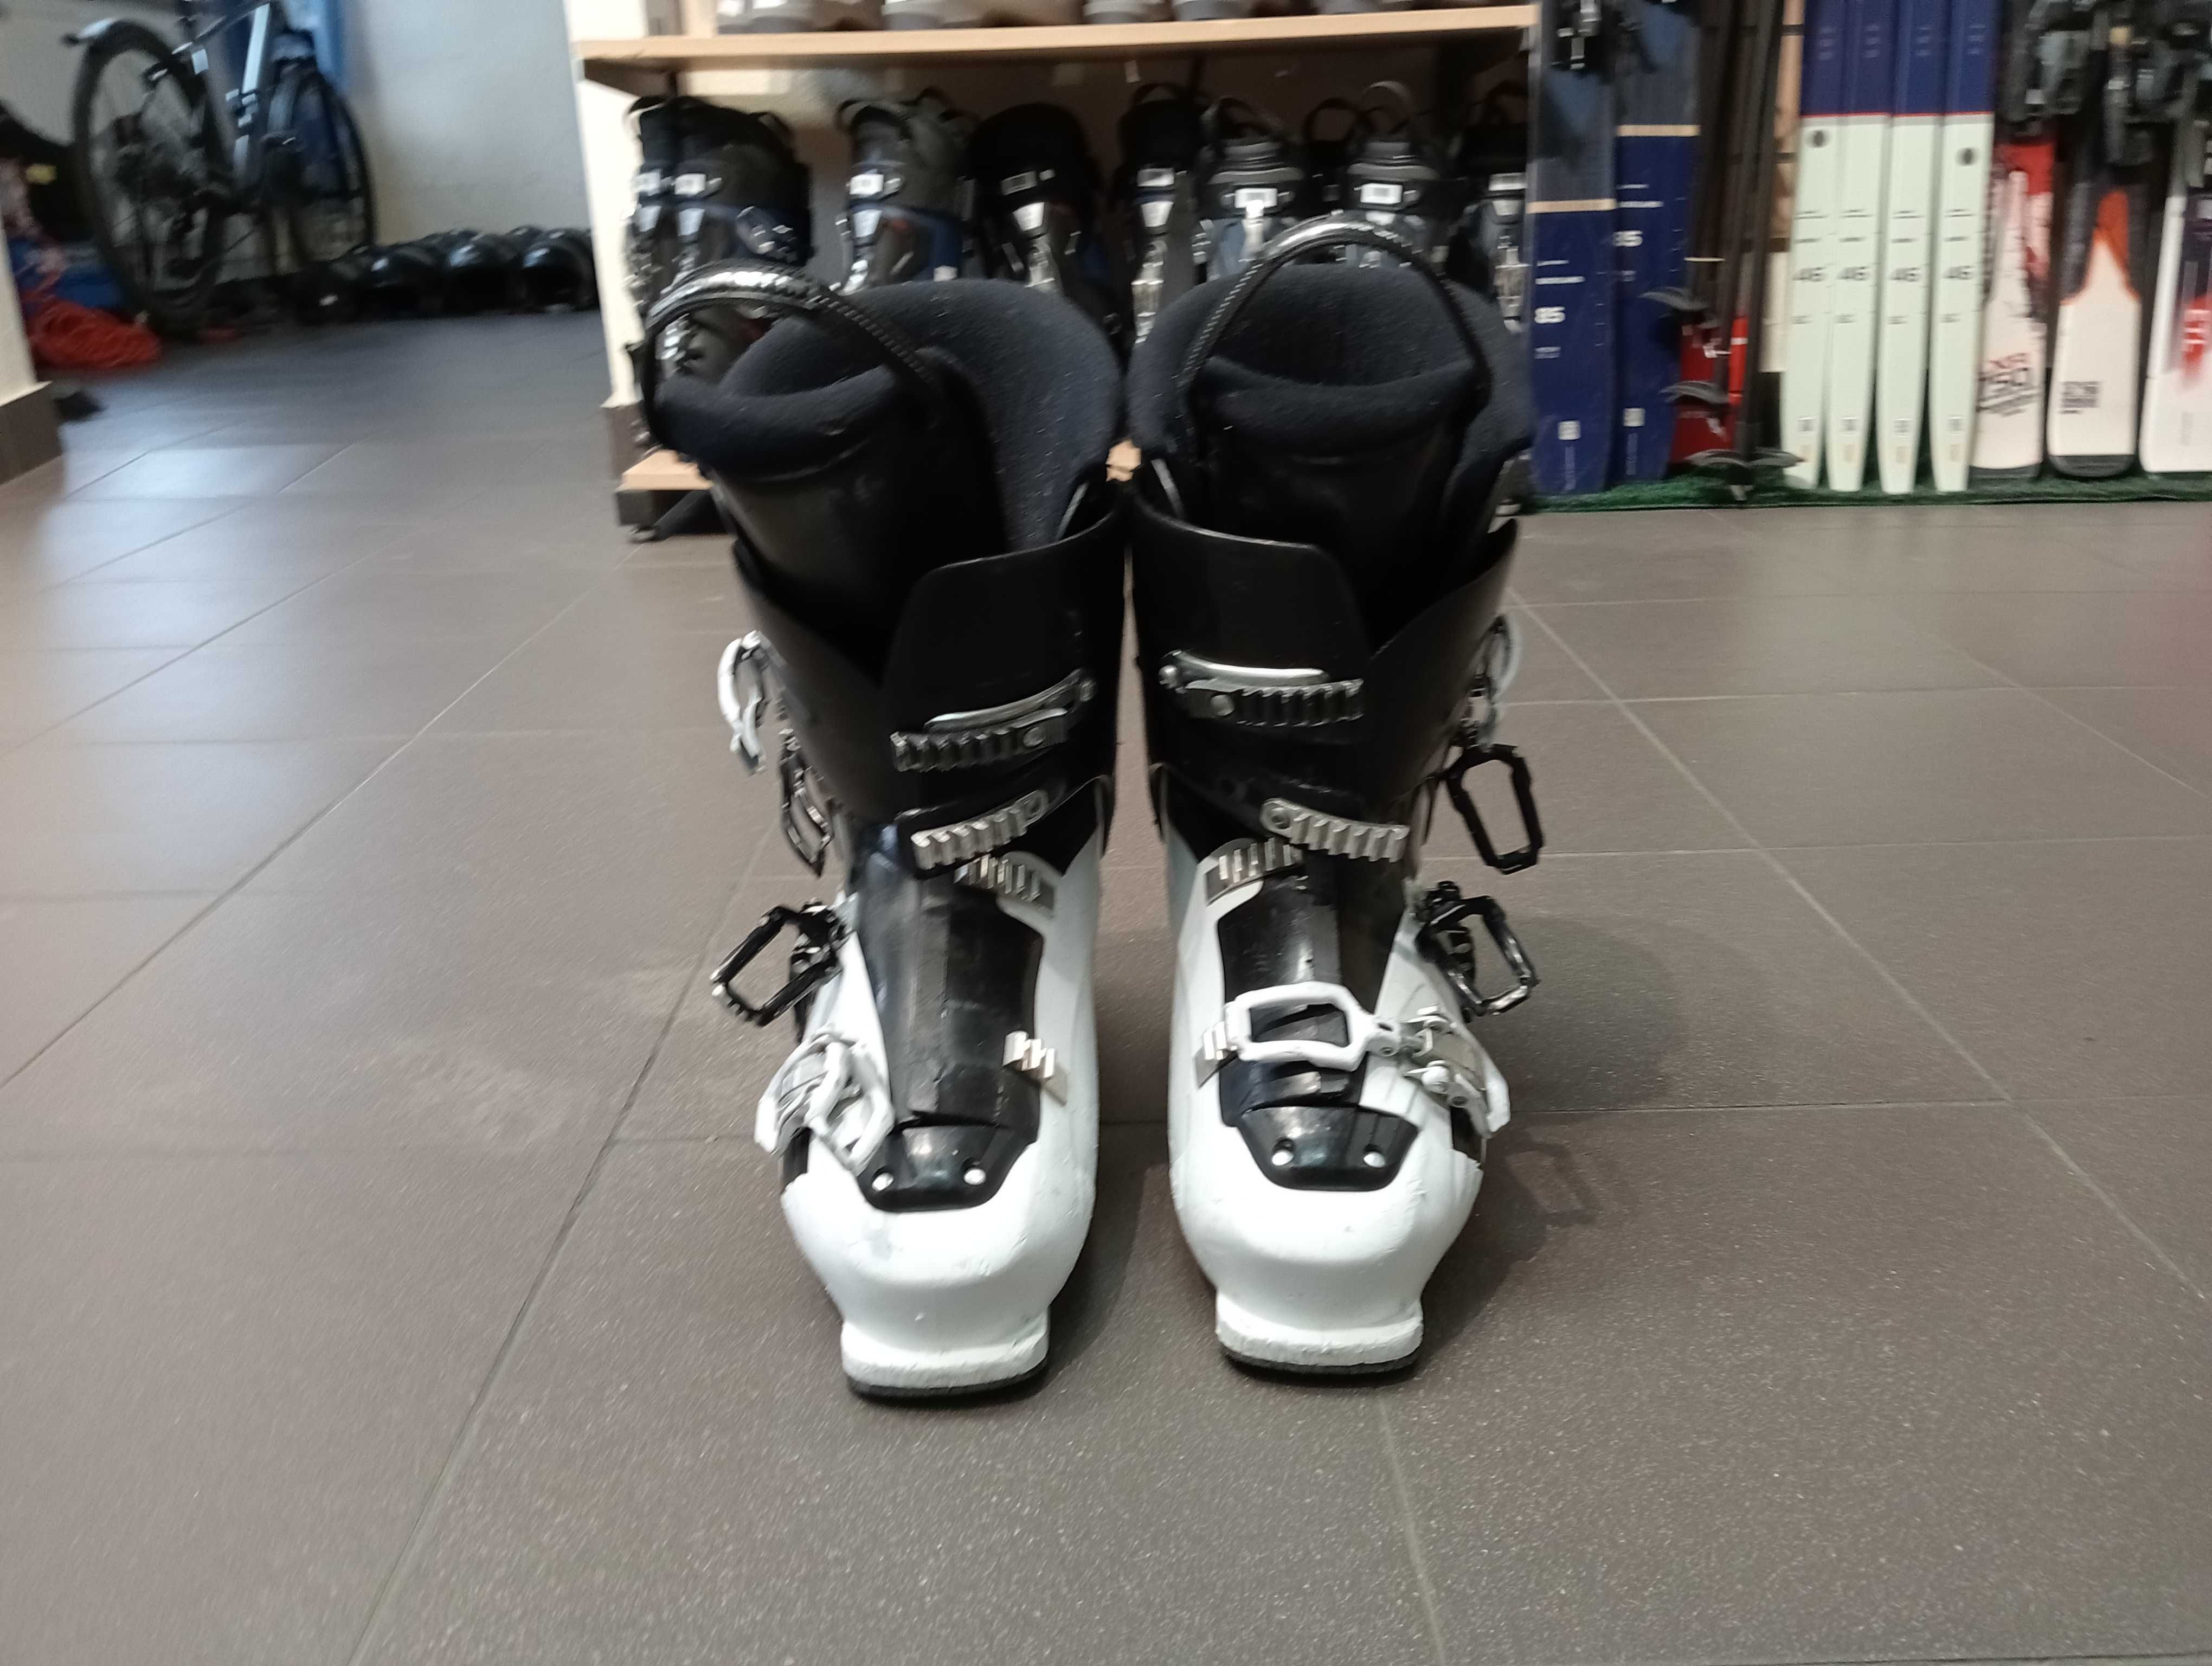 Buty narciarskie Tecnica Mega RT roz. 45 [29]